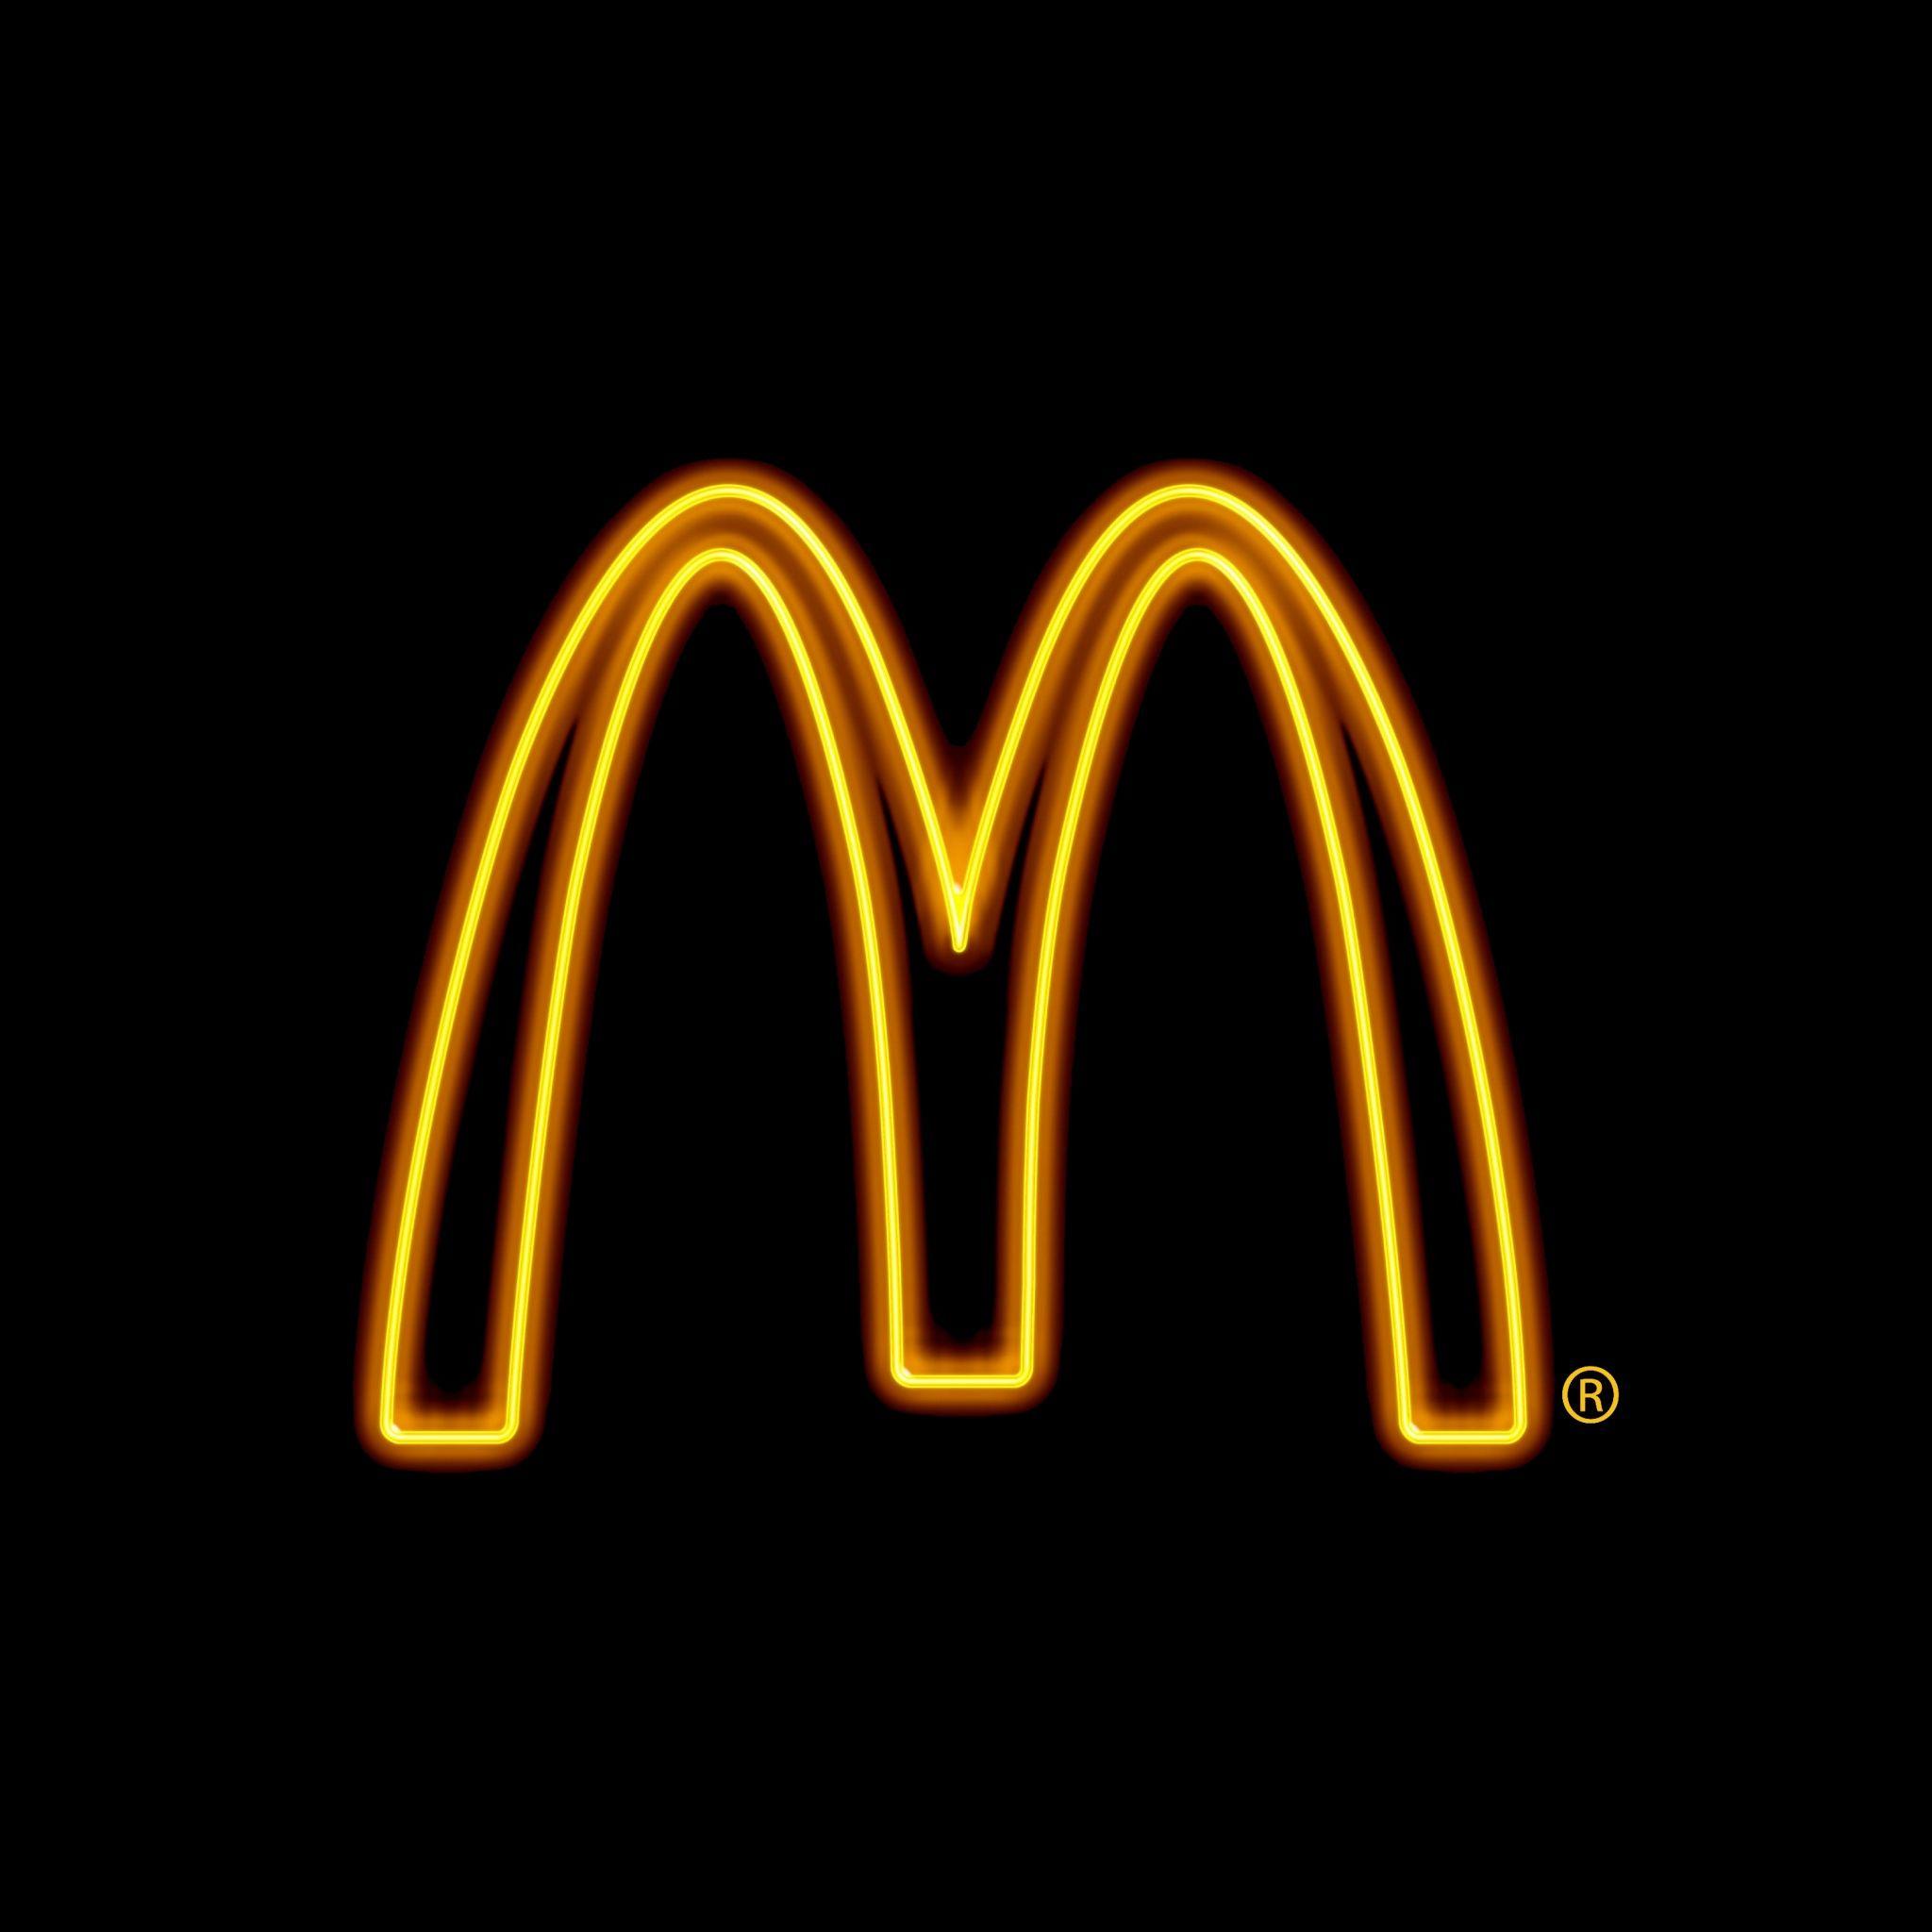 Free download McDonalds About McDonalds [1600x800] for your Desktop